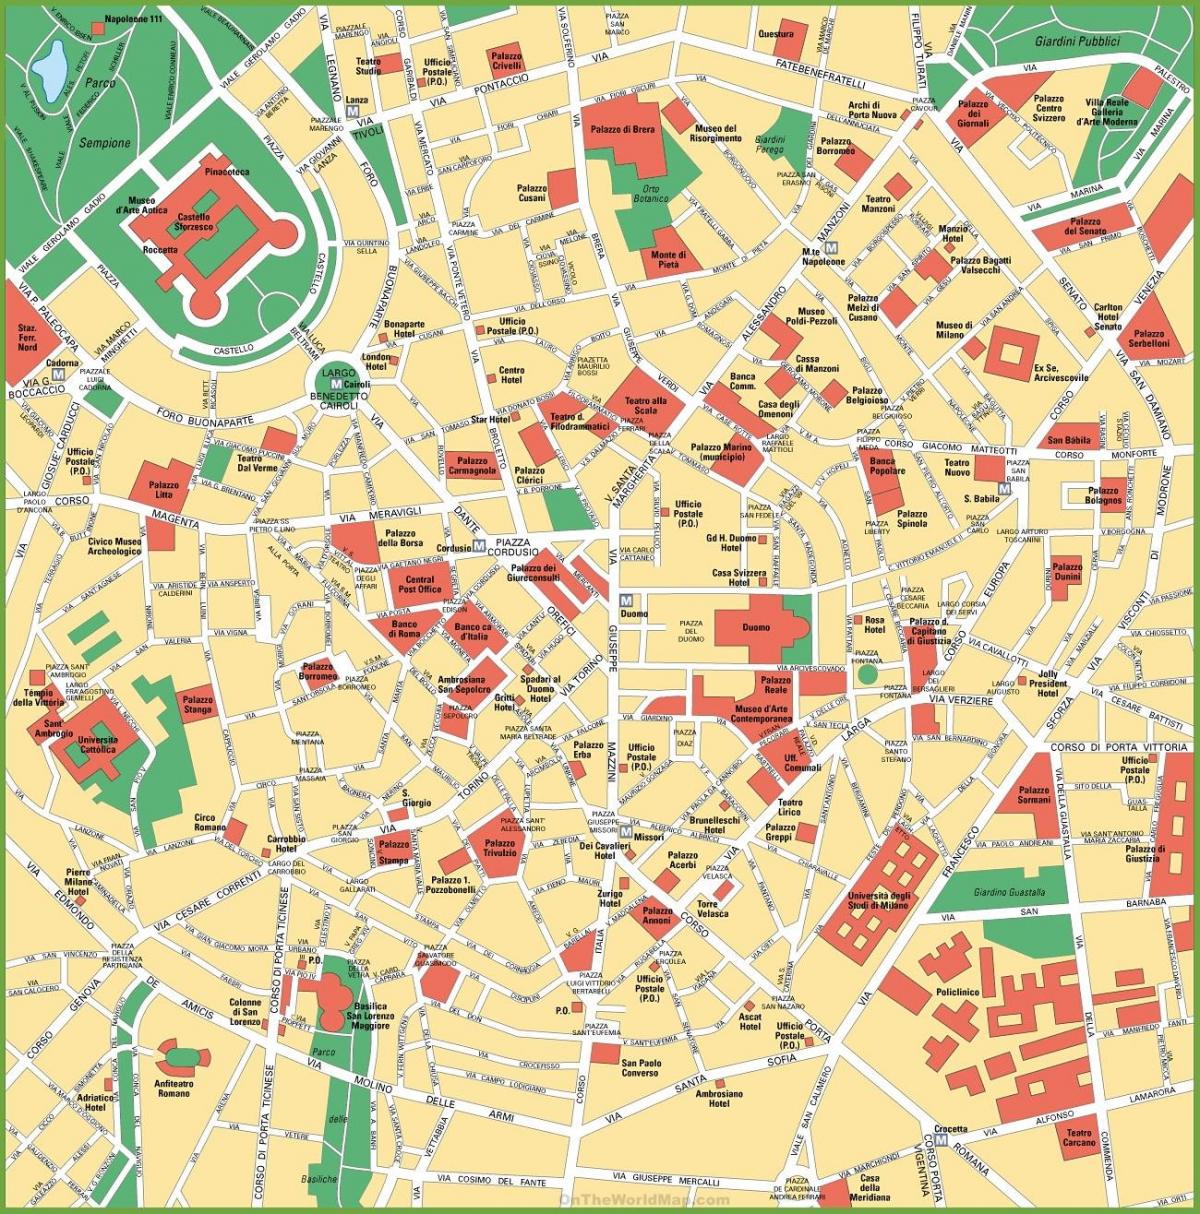 milano city-kaart